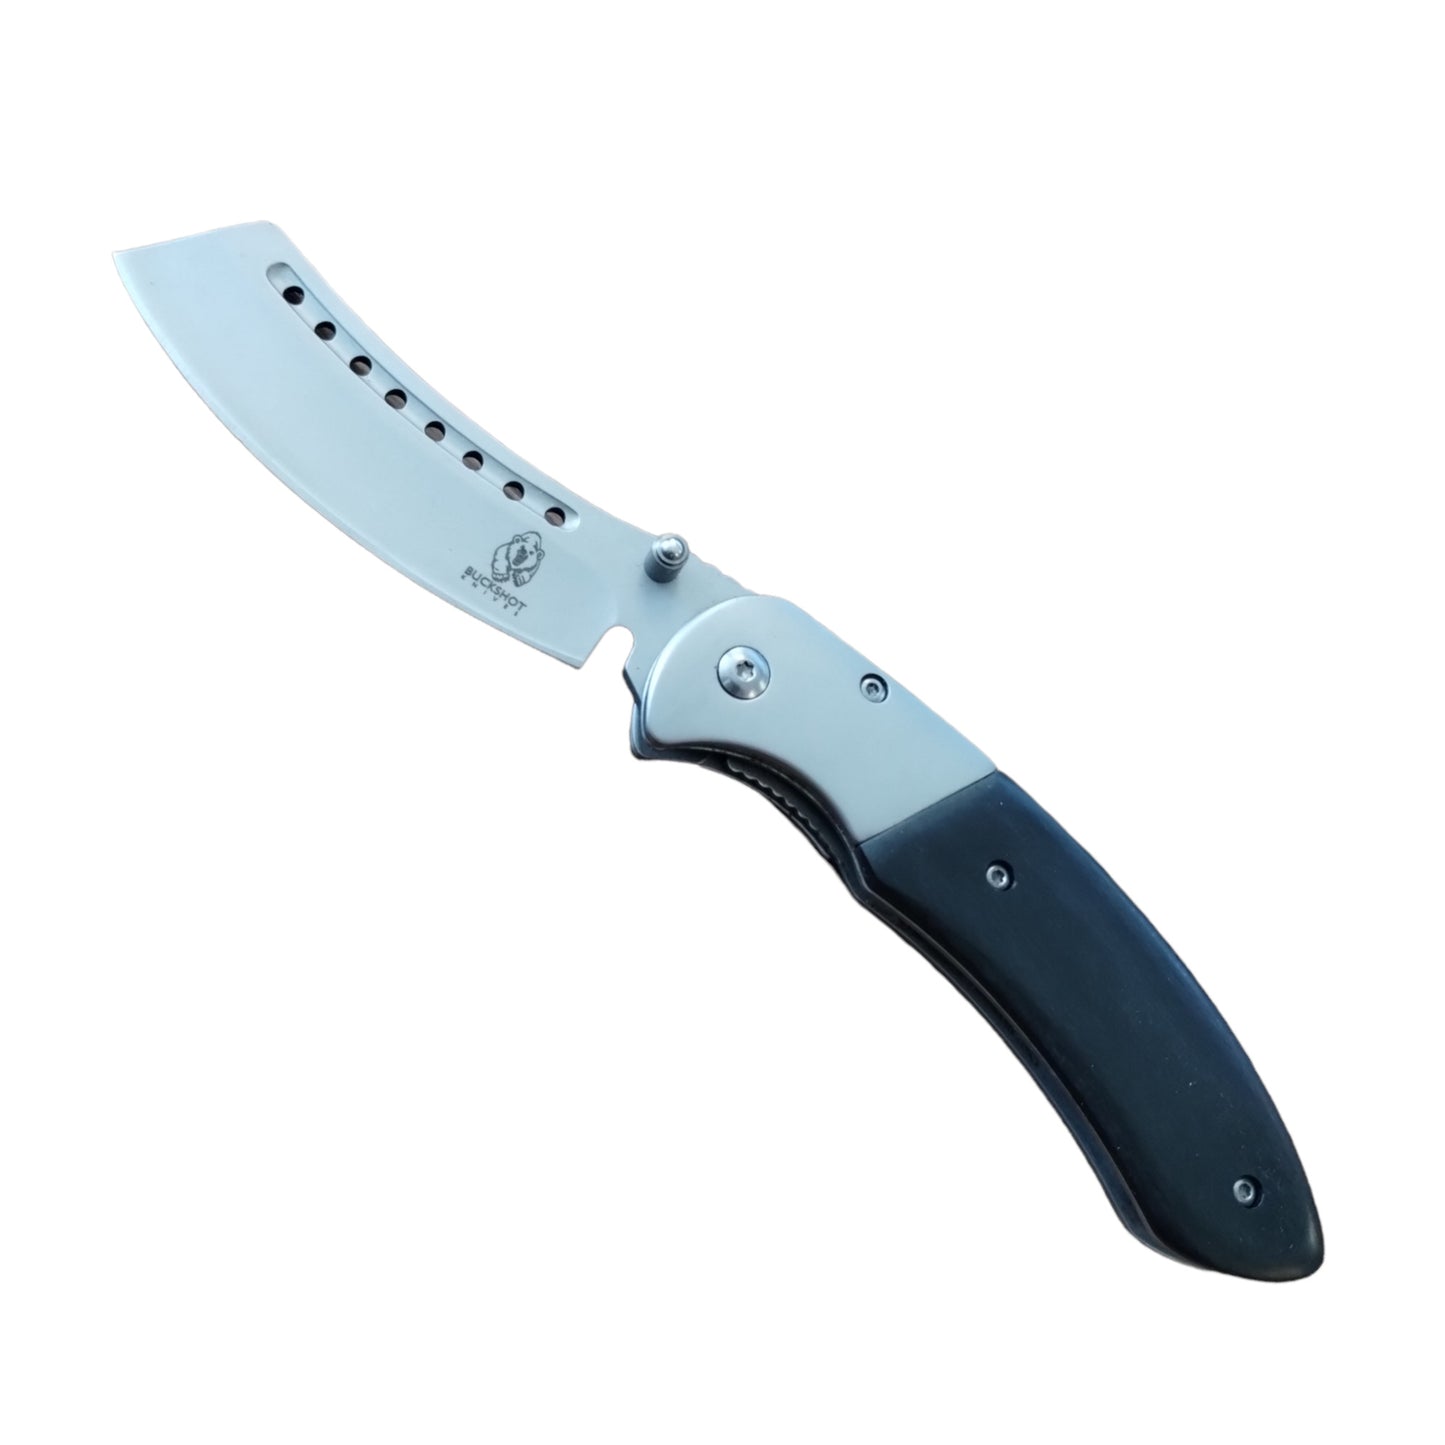 Cleaver classic pocket knife